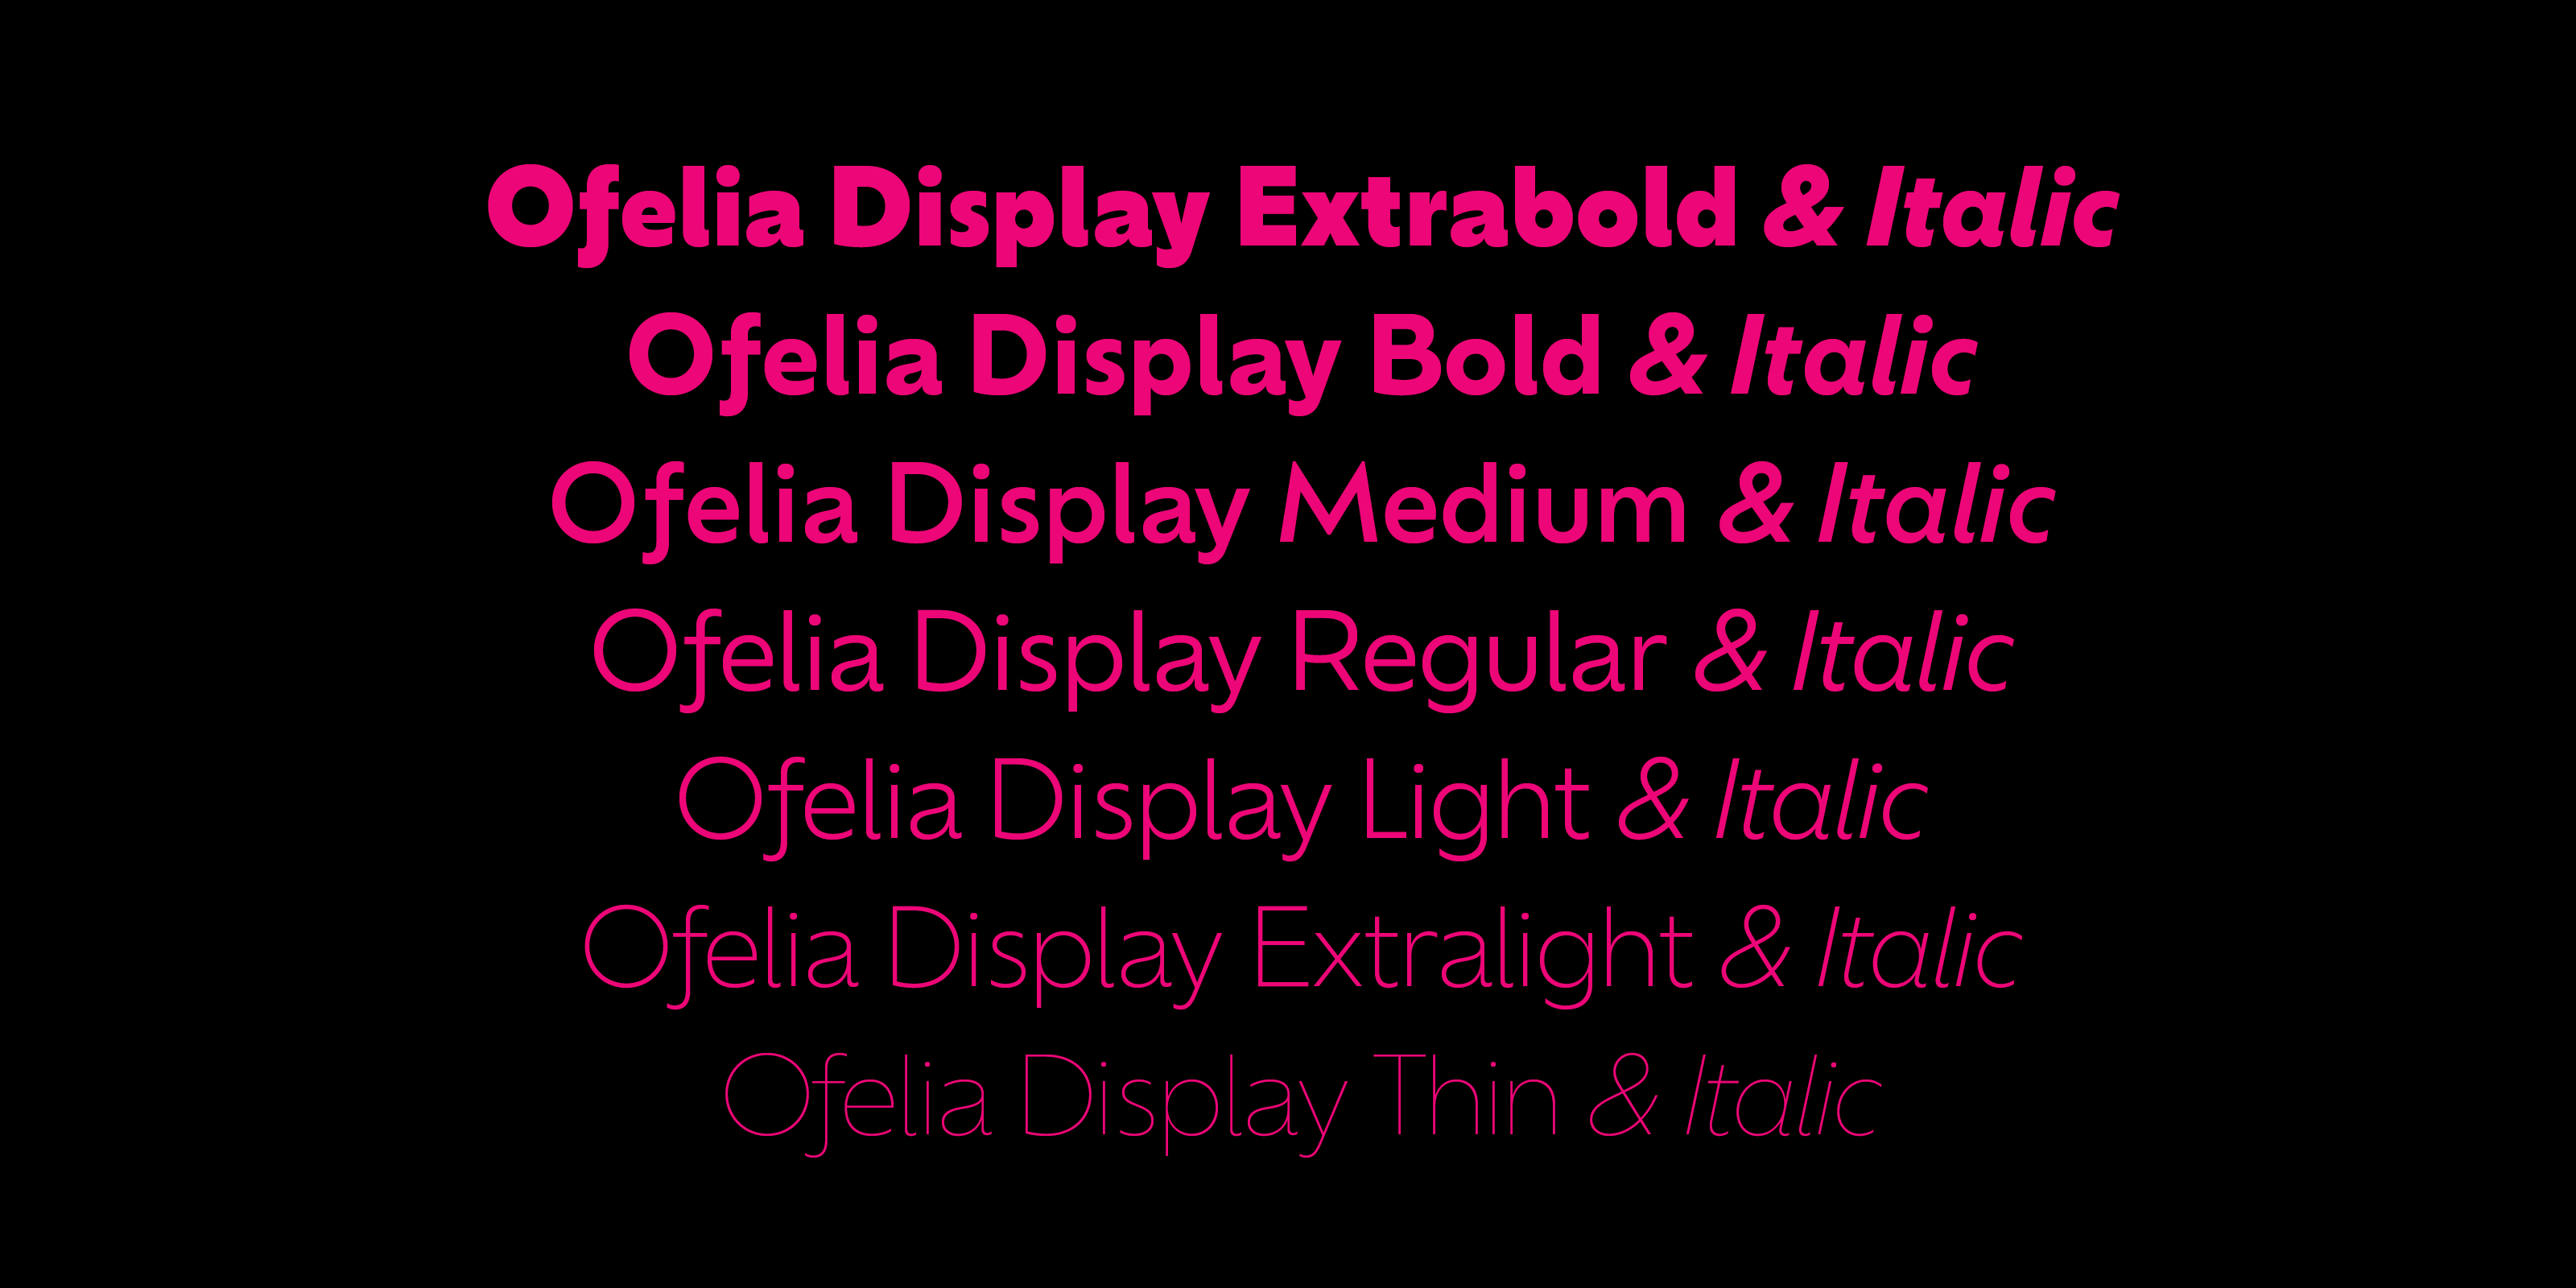 Card displaying Ofelia Display typeface in various styles